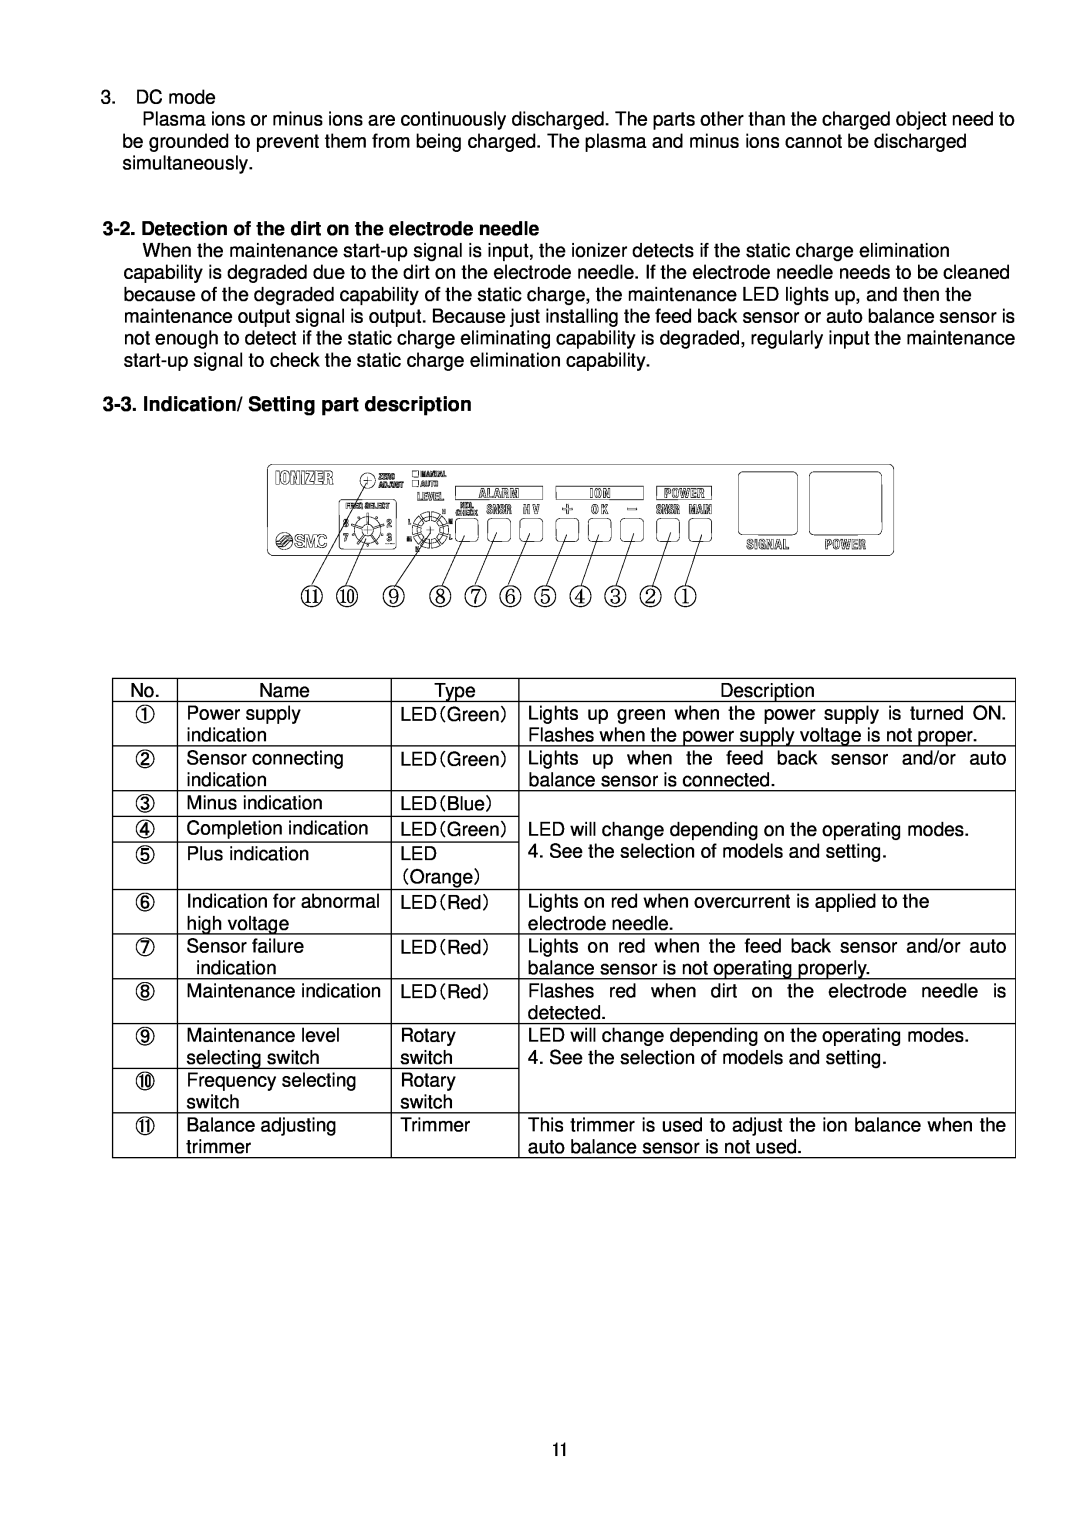 Sierra Monitor Corporation IZS31 operation manual ⑪ ⑩ ⑨ ⑧ ⑦ ⑥ ⑤ ④ ③ ② ①, Indication/ Setting part description 